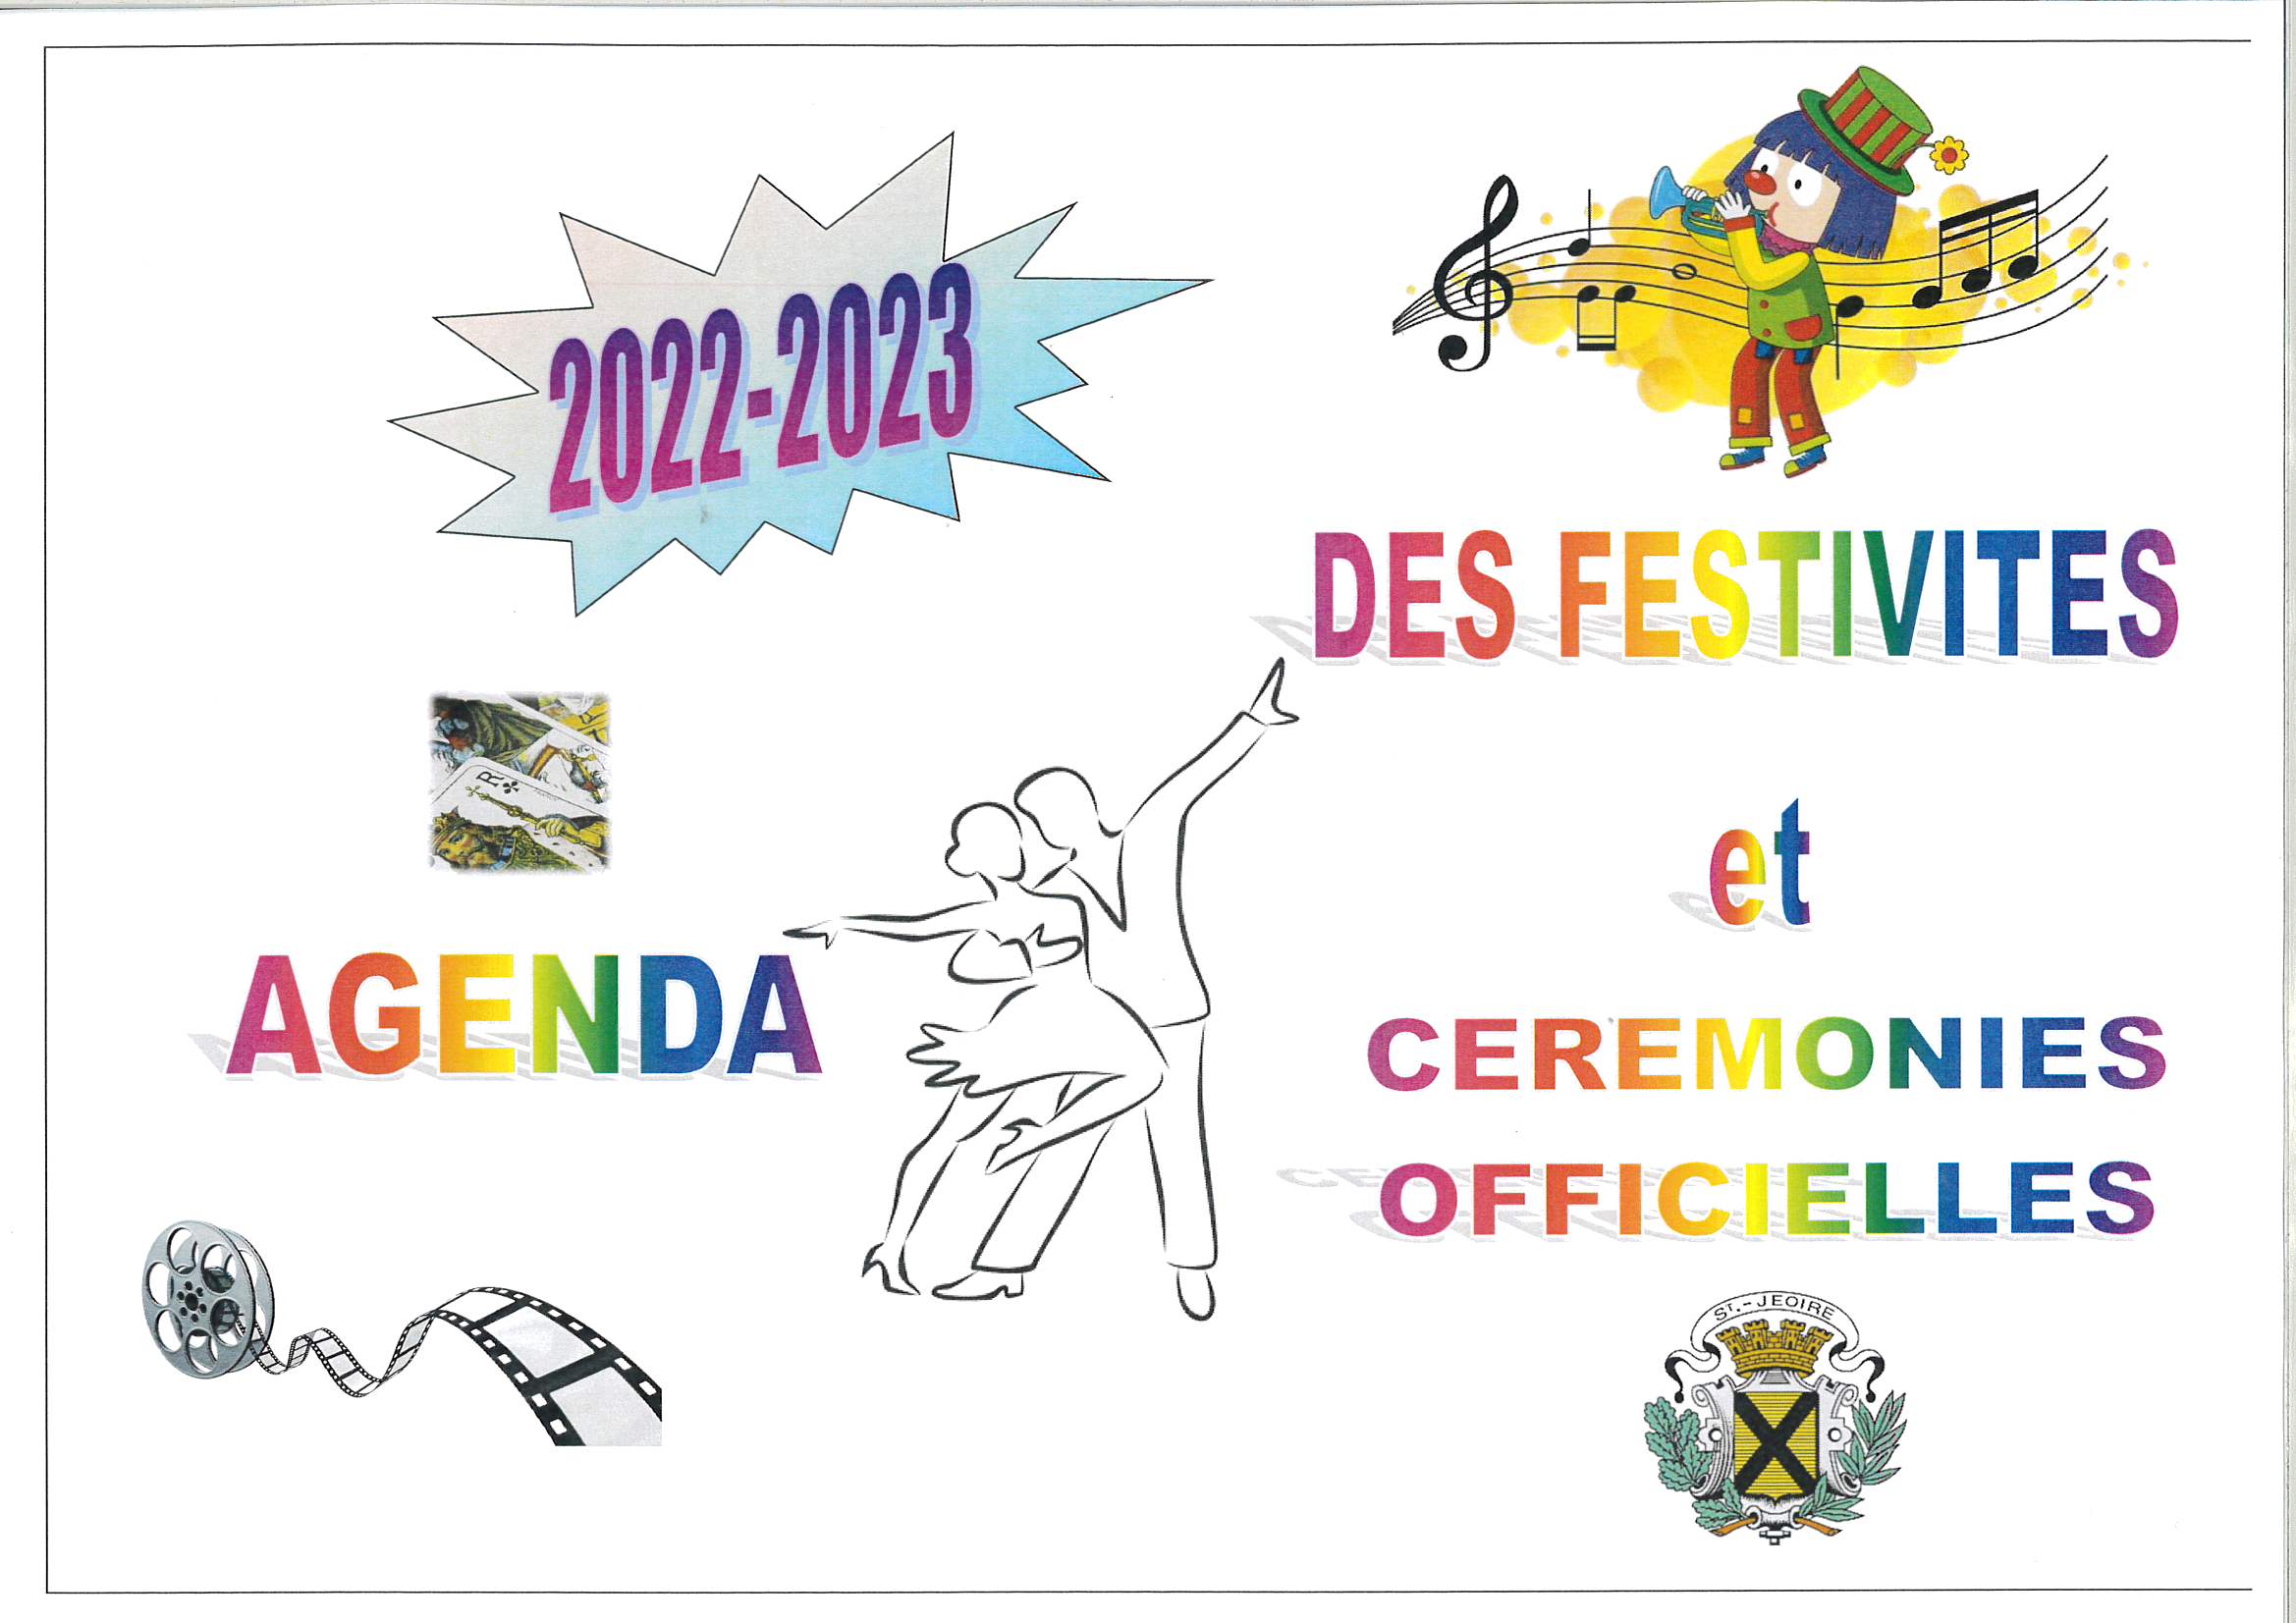 Agenda des festivites 2022 2023